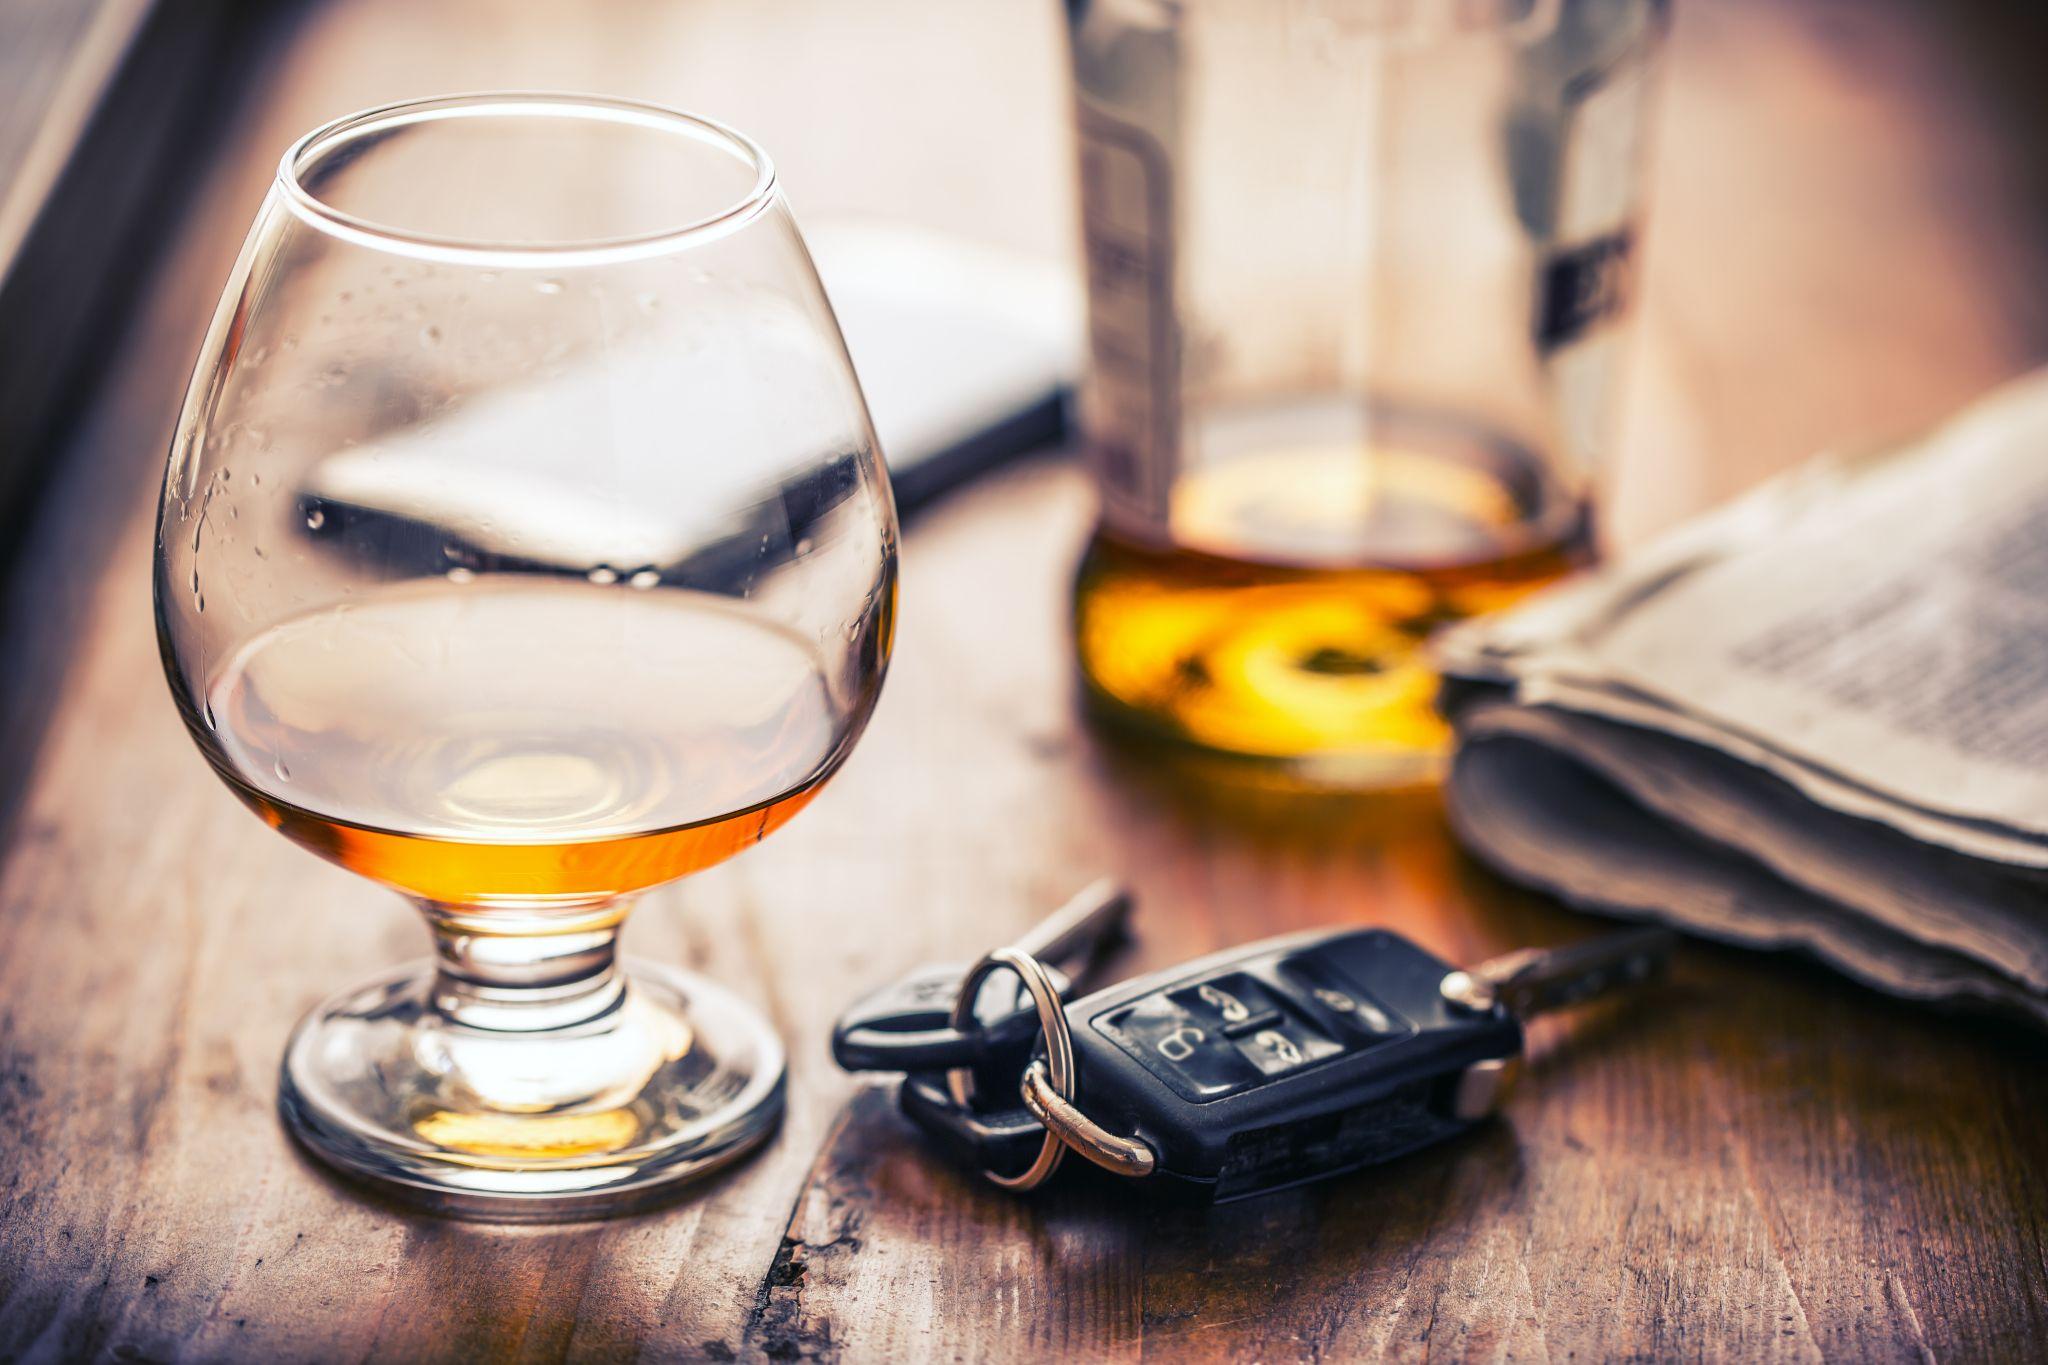 Drug and alcohol driving awareness